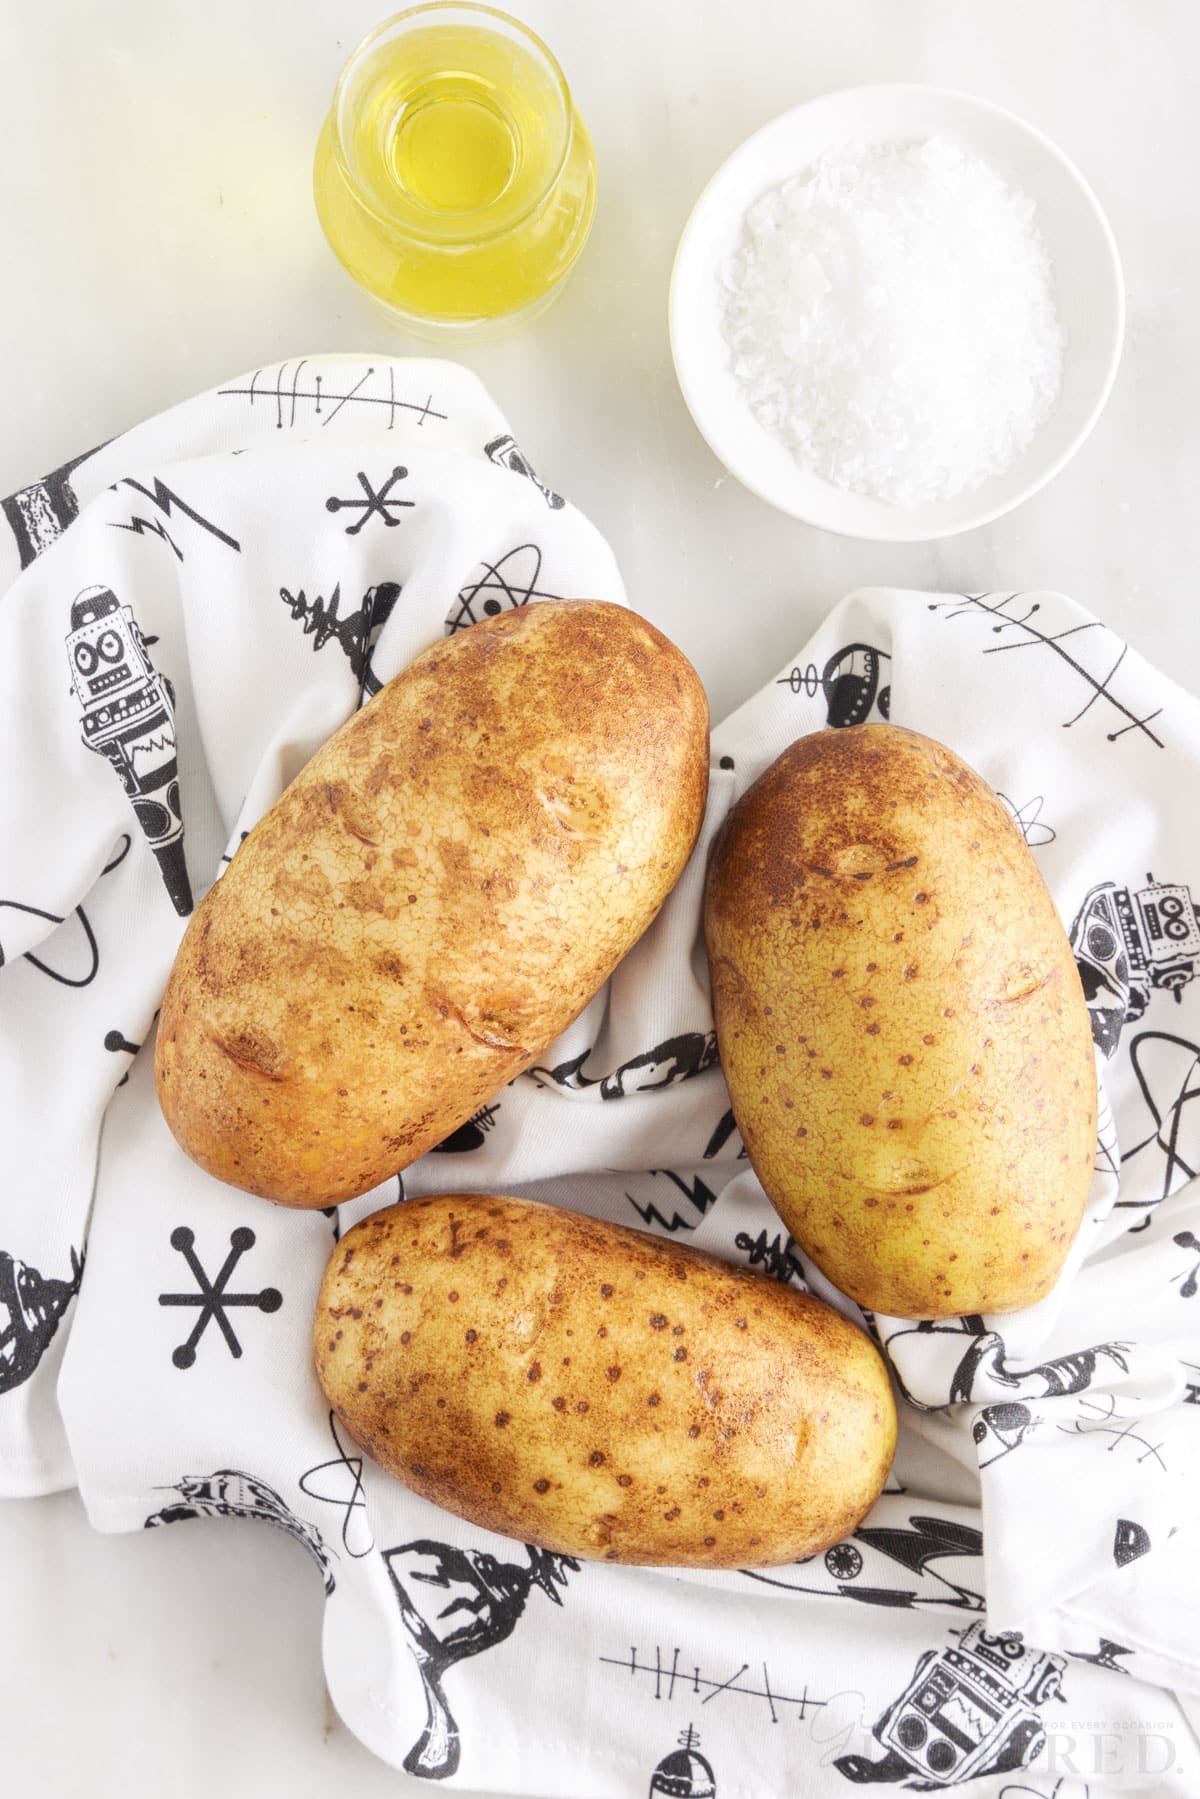 ingredients needed to make baked potatoes in air fryer